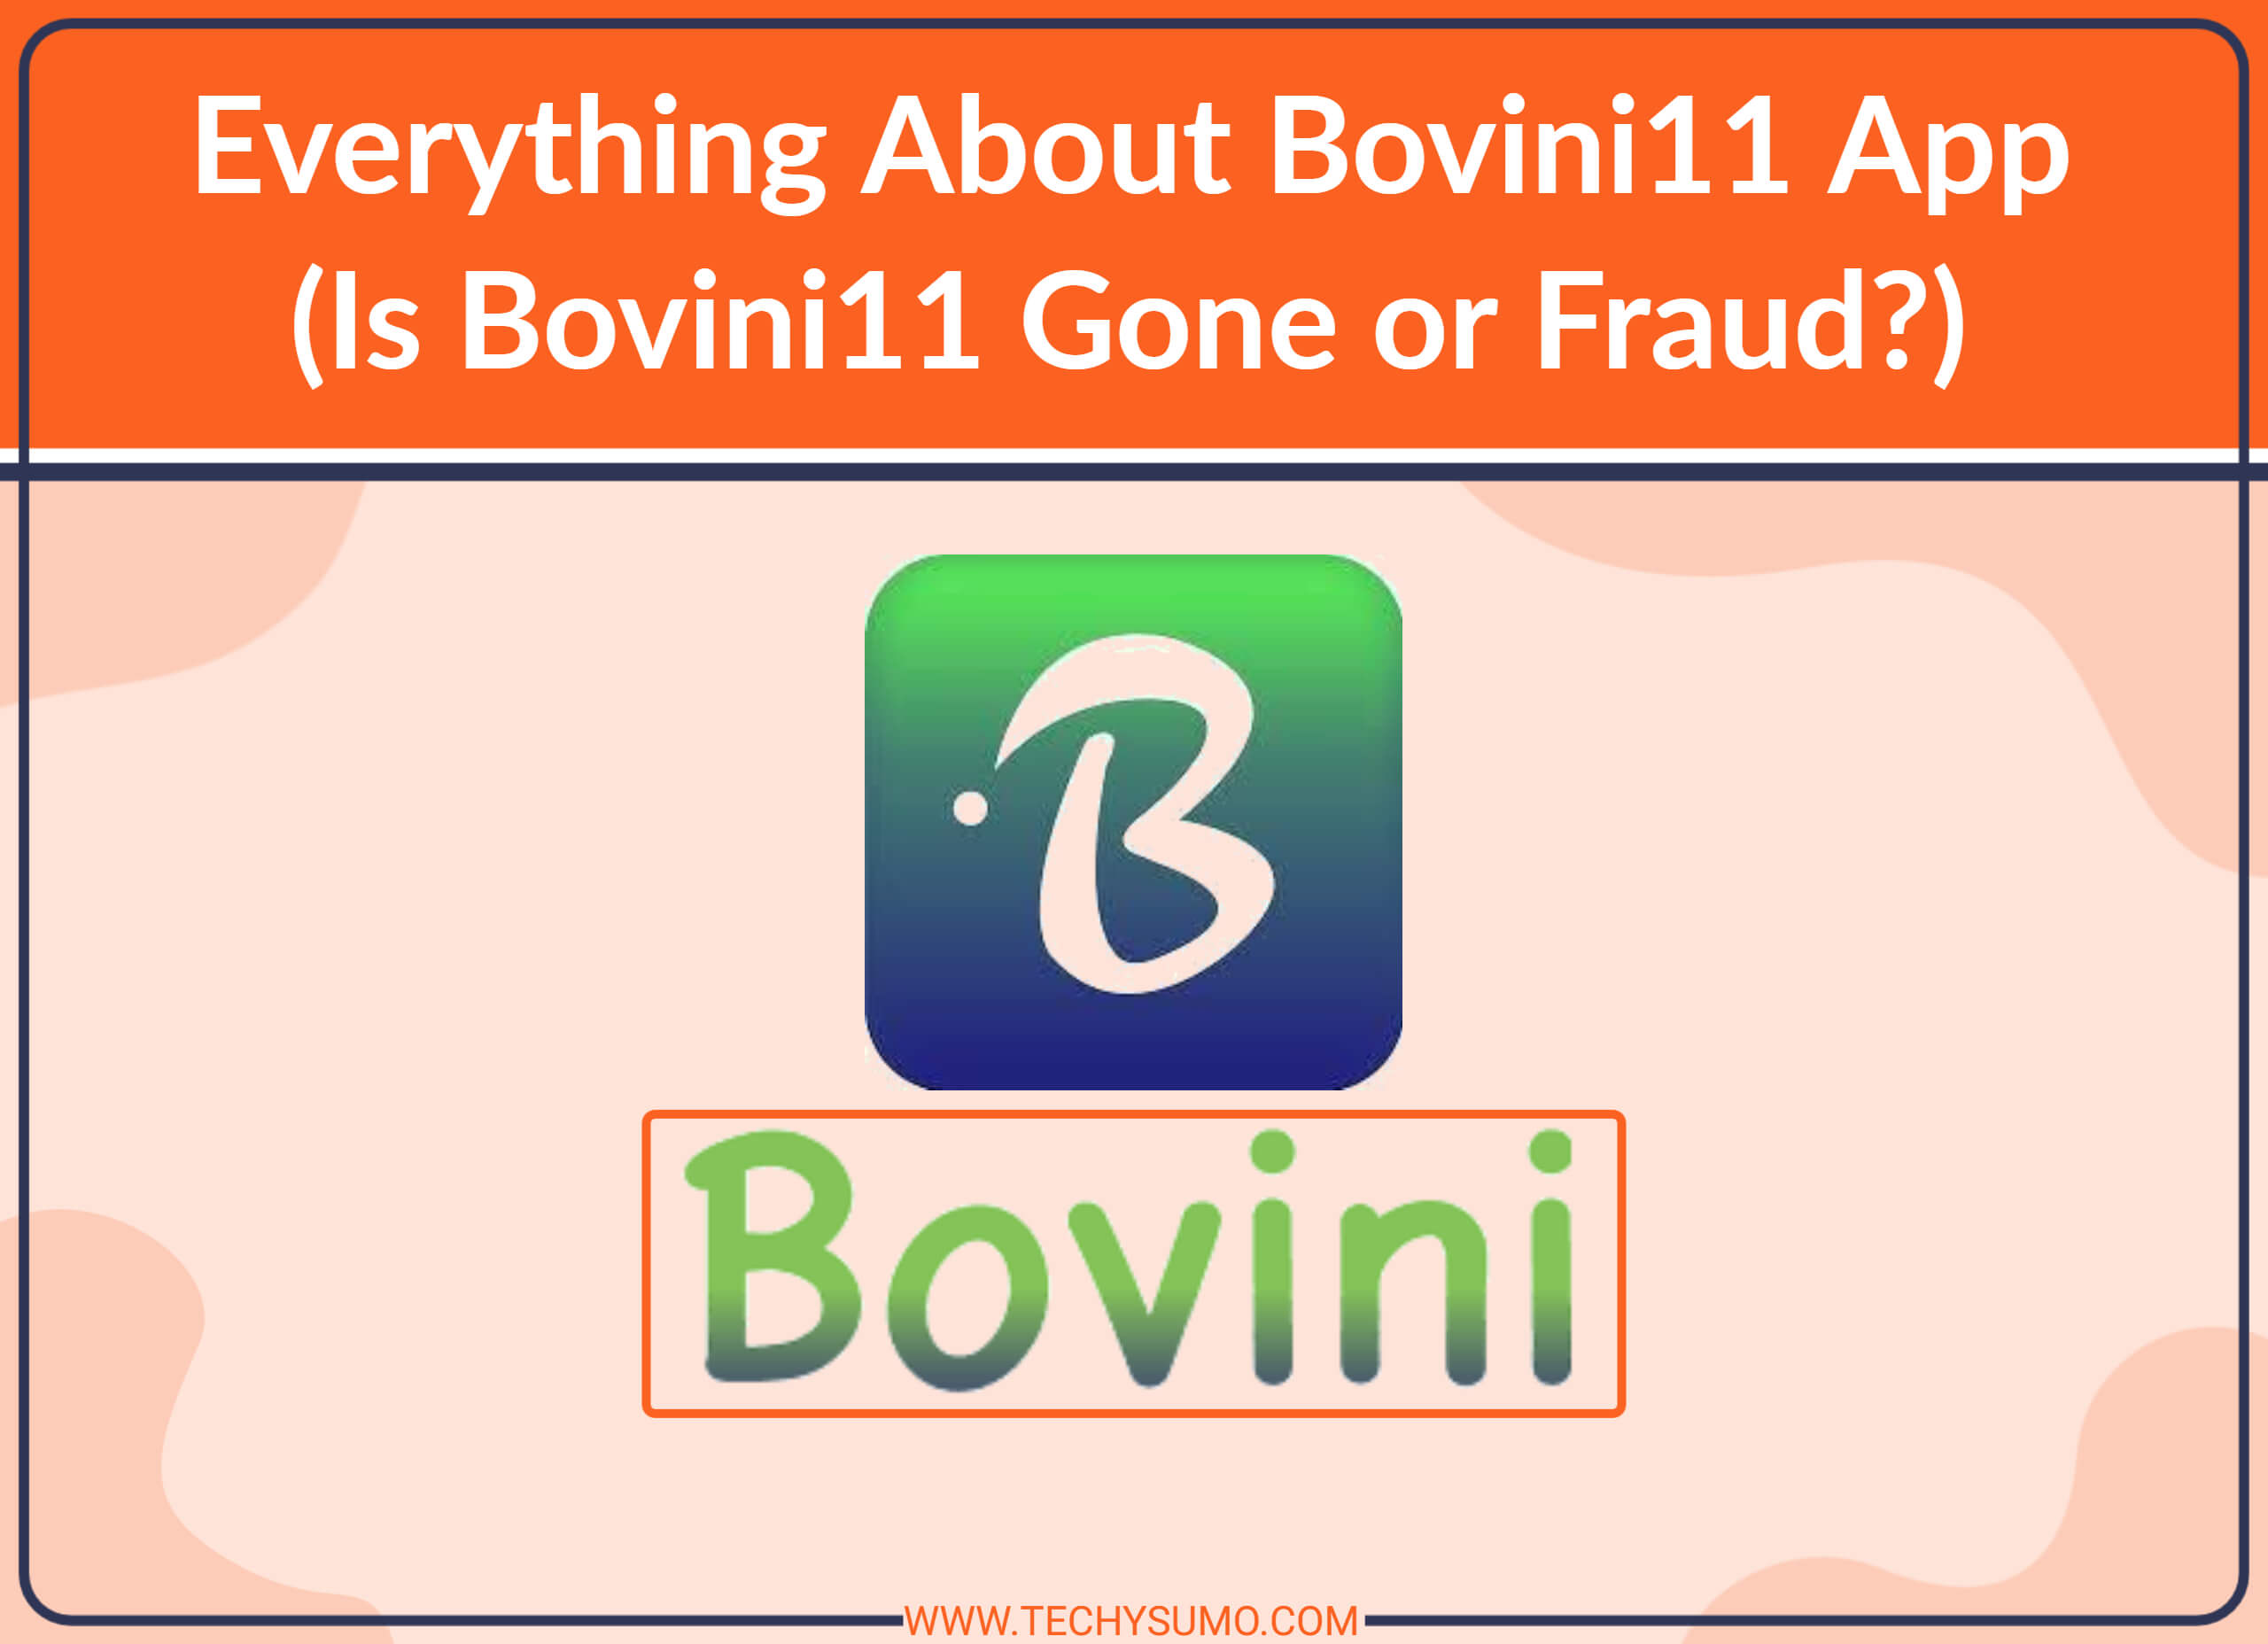 Bovini 11 App Fraud